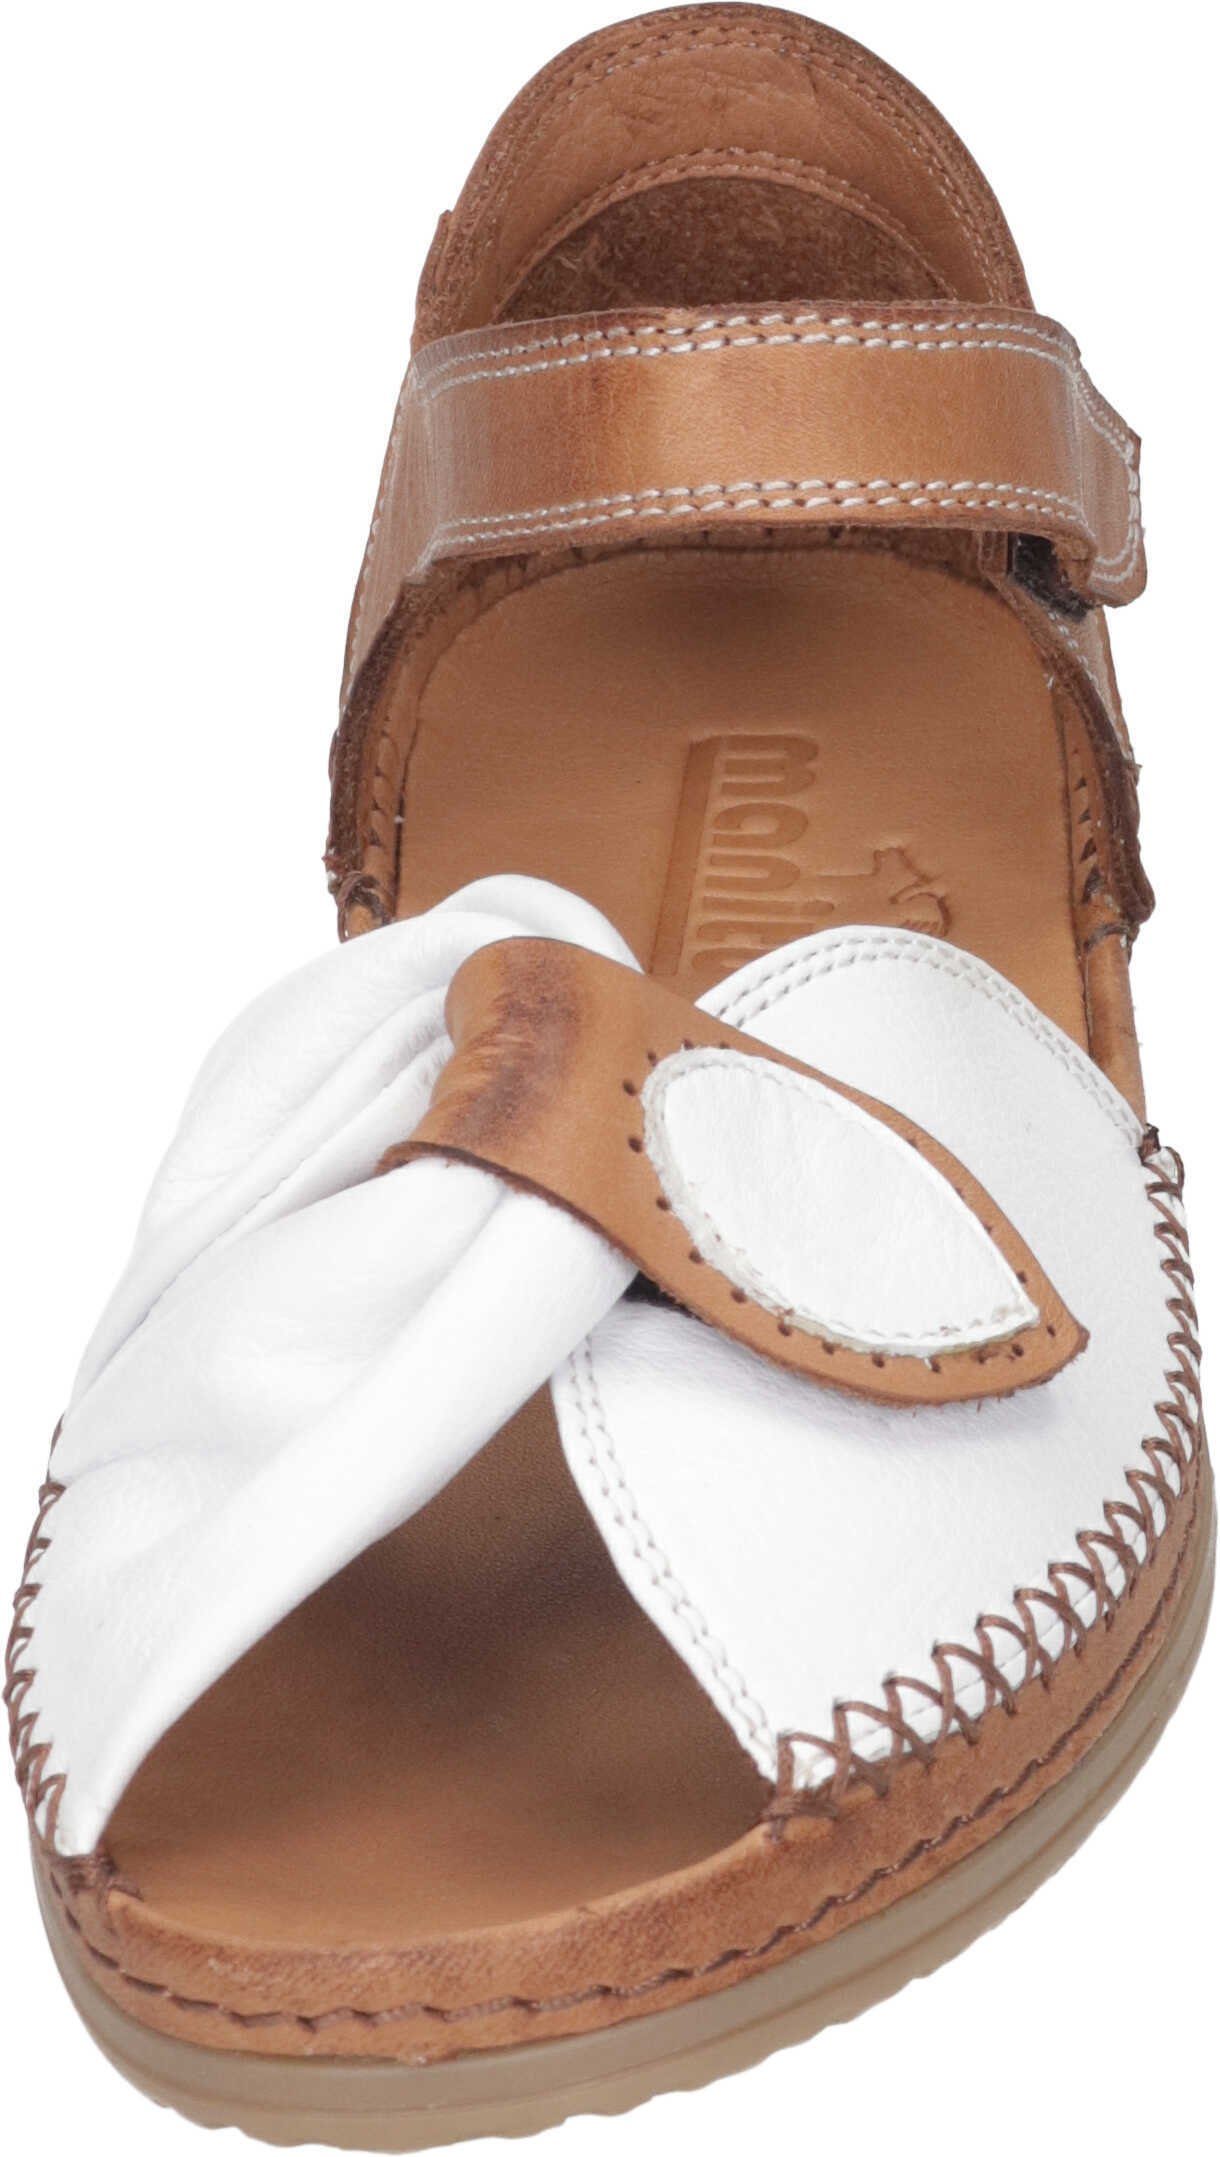 Manitu Sandalen Sandalette aus echtem Leder